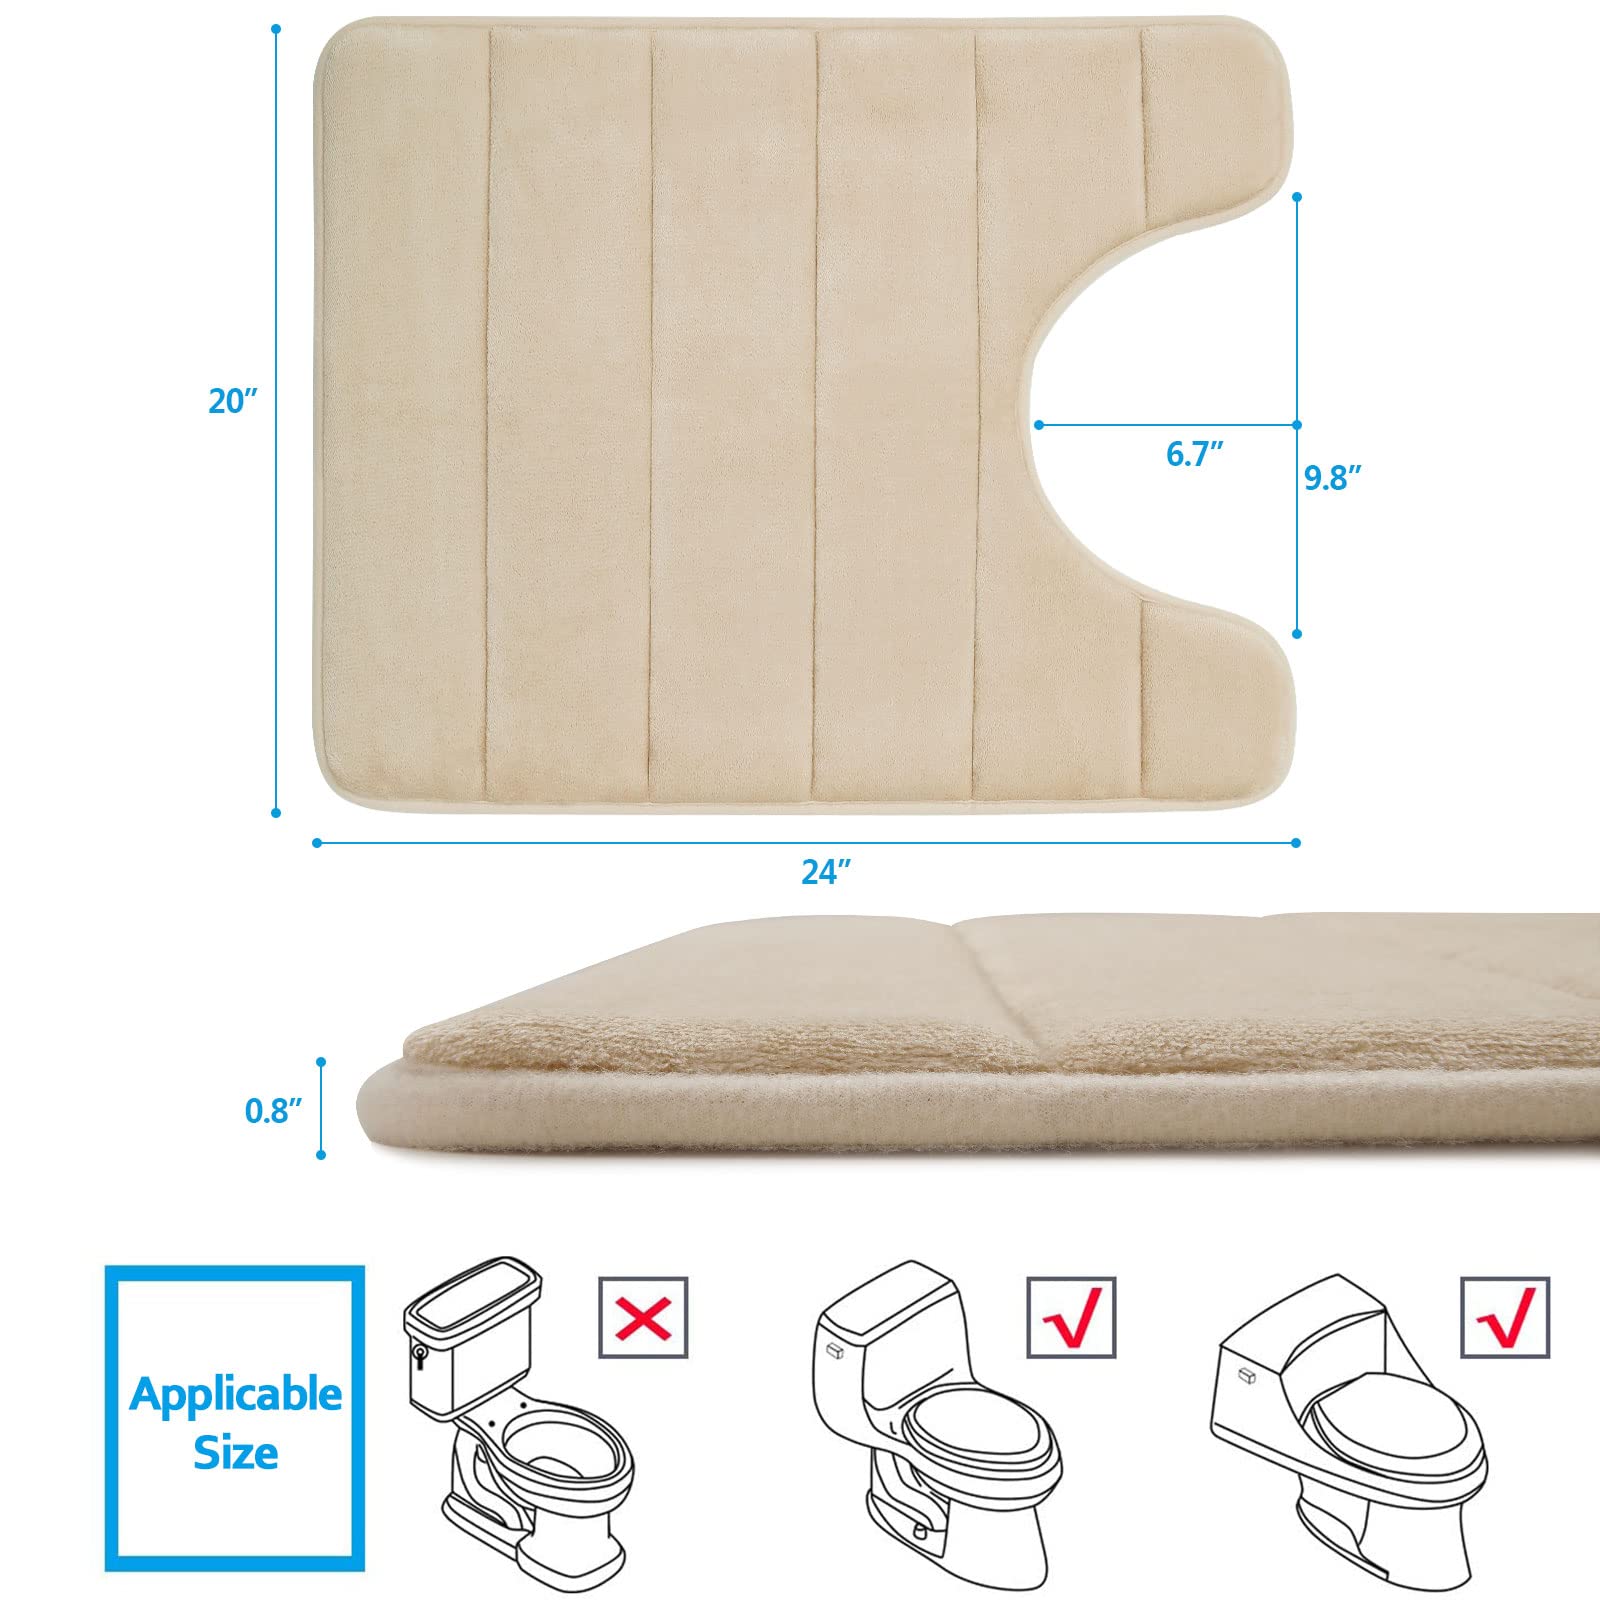 Smiry Memory Foam Bathroom rugs Toilet mats, U-Shaped Contour Carpet, 20" x 24", Beige - image 5 of 8